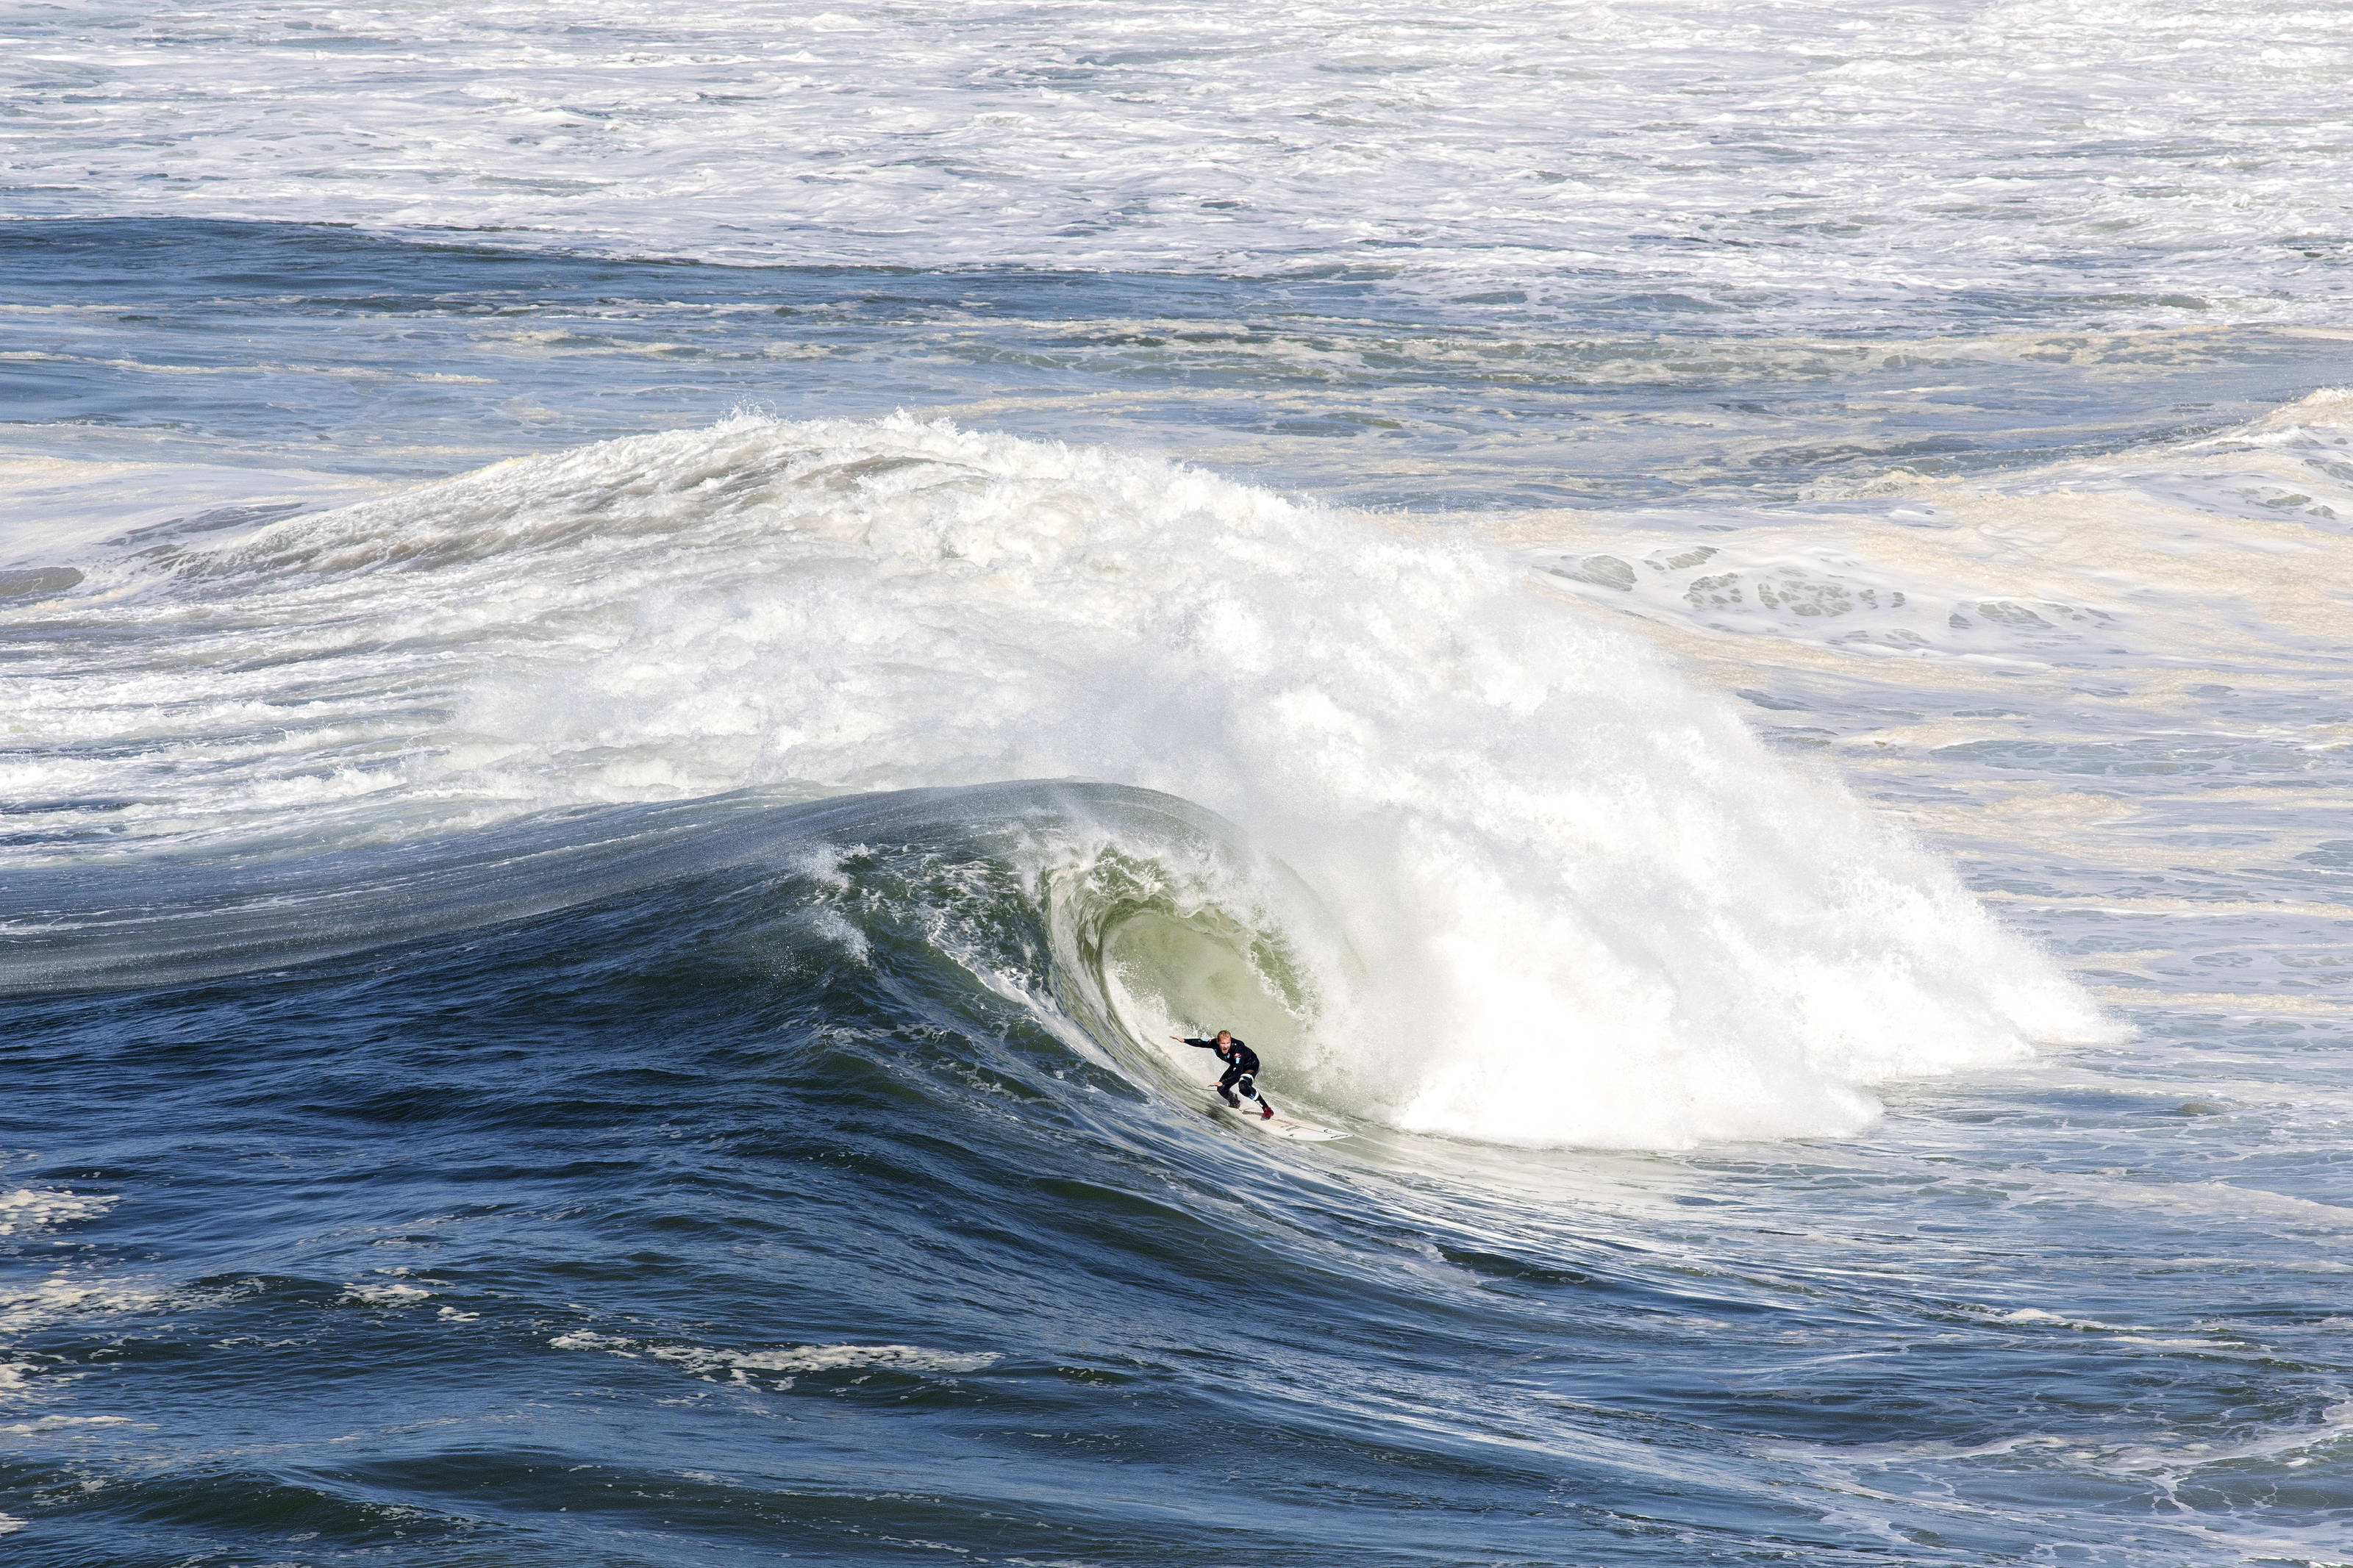 Andrew Cotton surfing at Praia do Norte in Nazare, Portugal November 2017